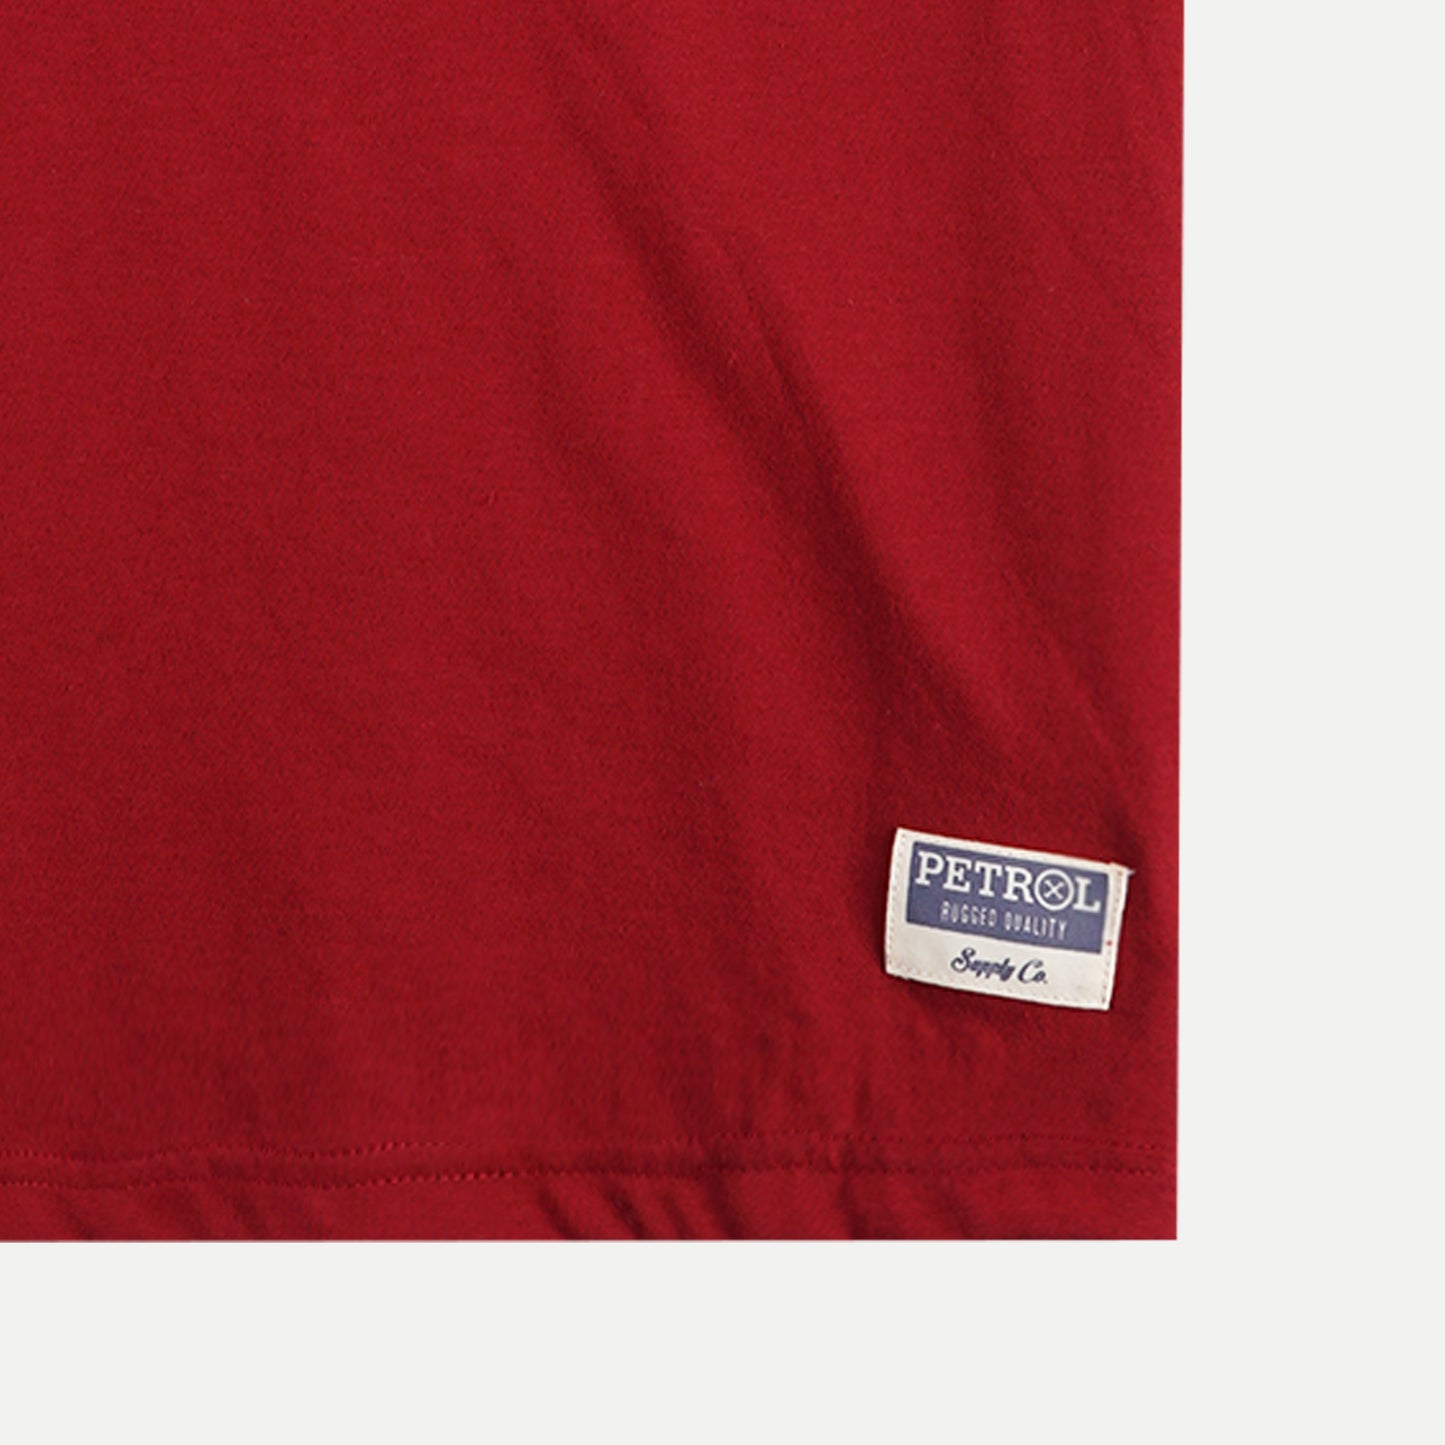 Petrol Basic Tees for Men Slim Fitting Shirt CVC Jersey Fabric Trendy fashion Casual Top Crimson T-shirt for Men 126750-U (Crimson)